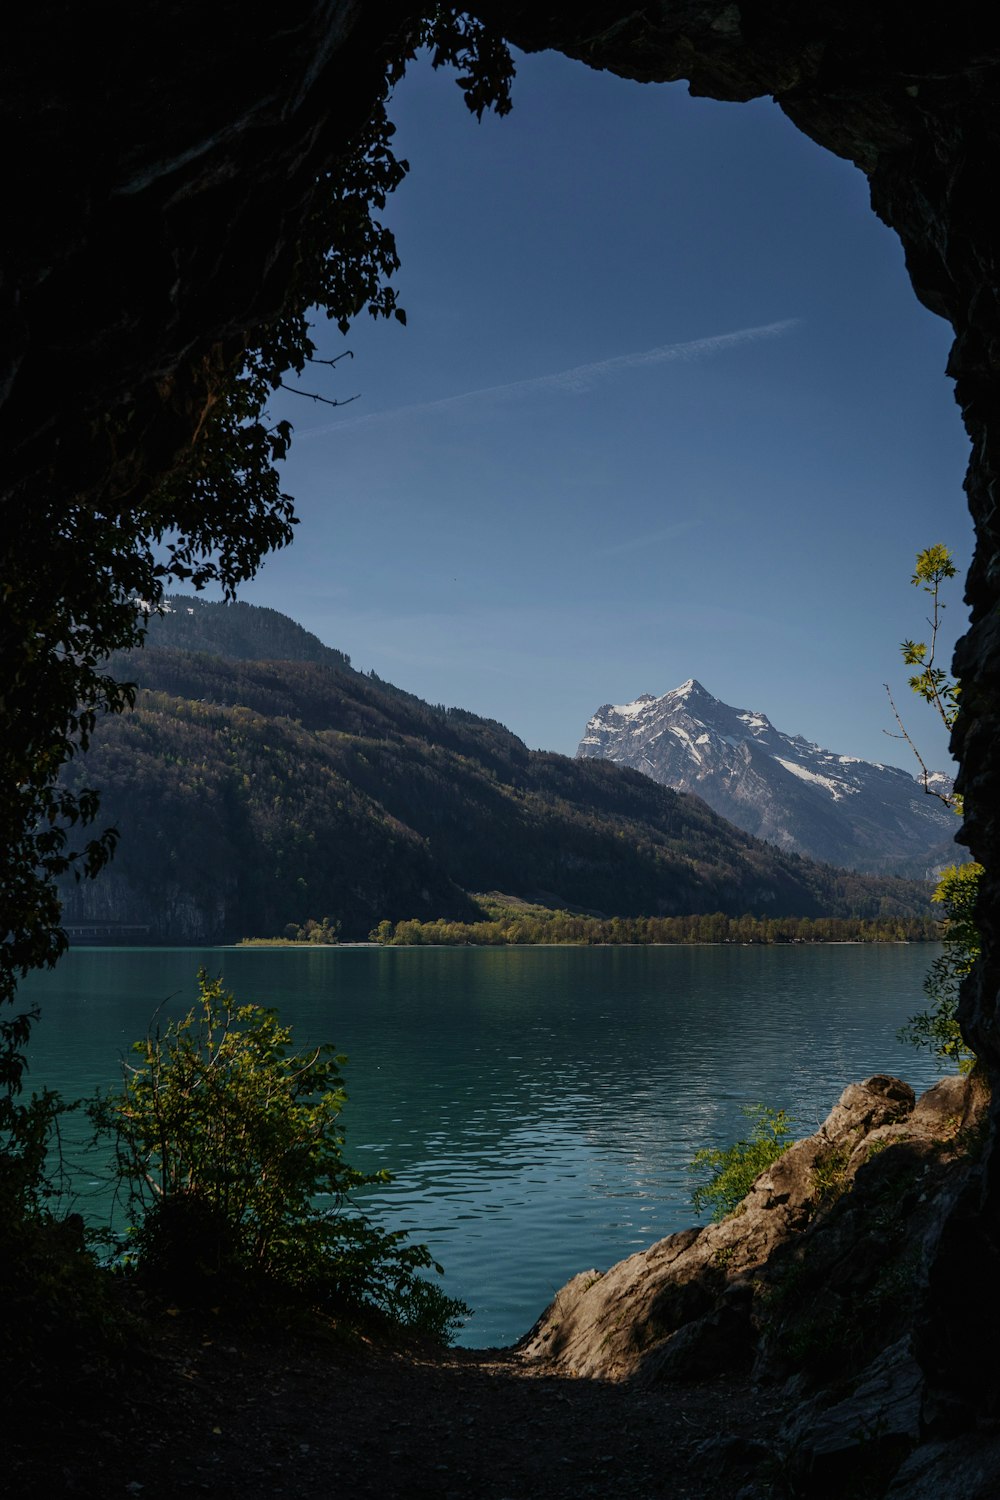 a view of a mountain lake through a cave